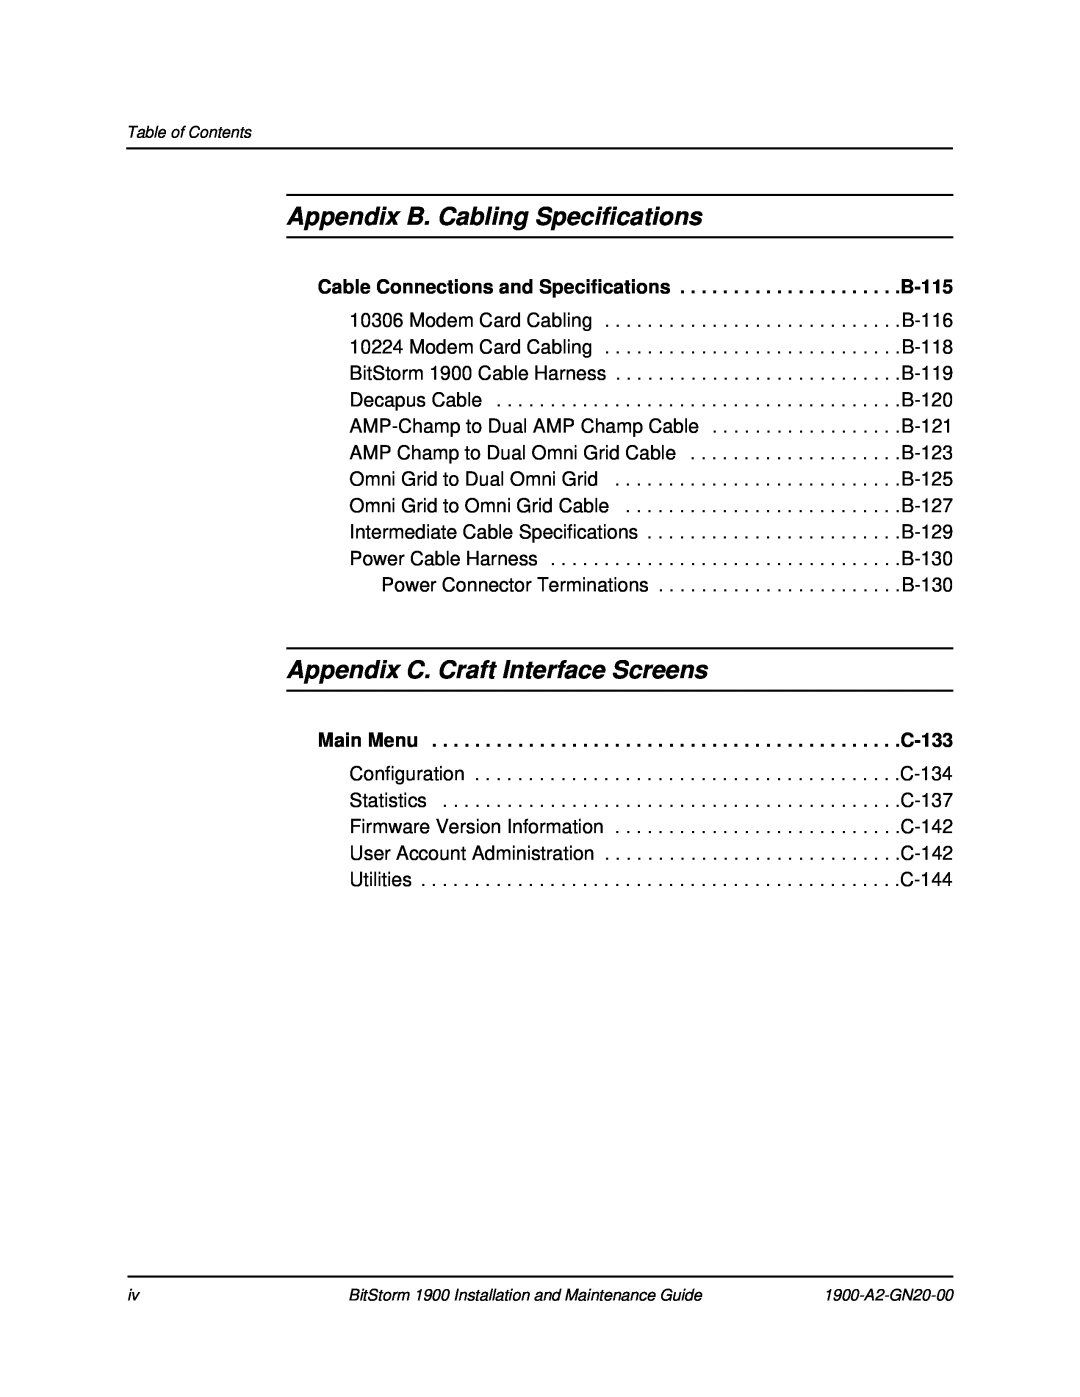 Paradyne 1900 manual Appendix B. Cabling Specifications, Appendix C. Craft Interface Screens 